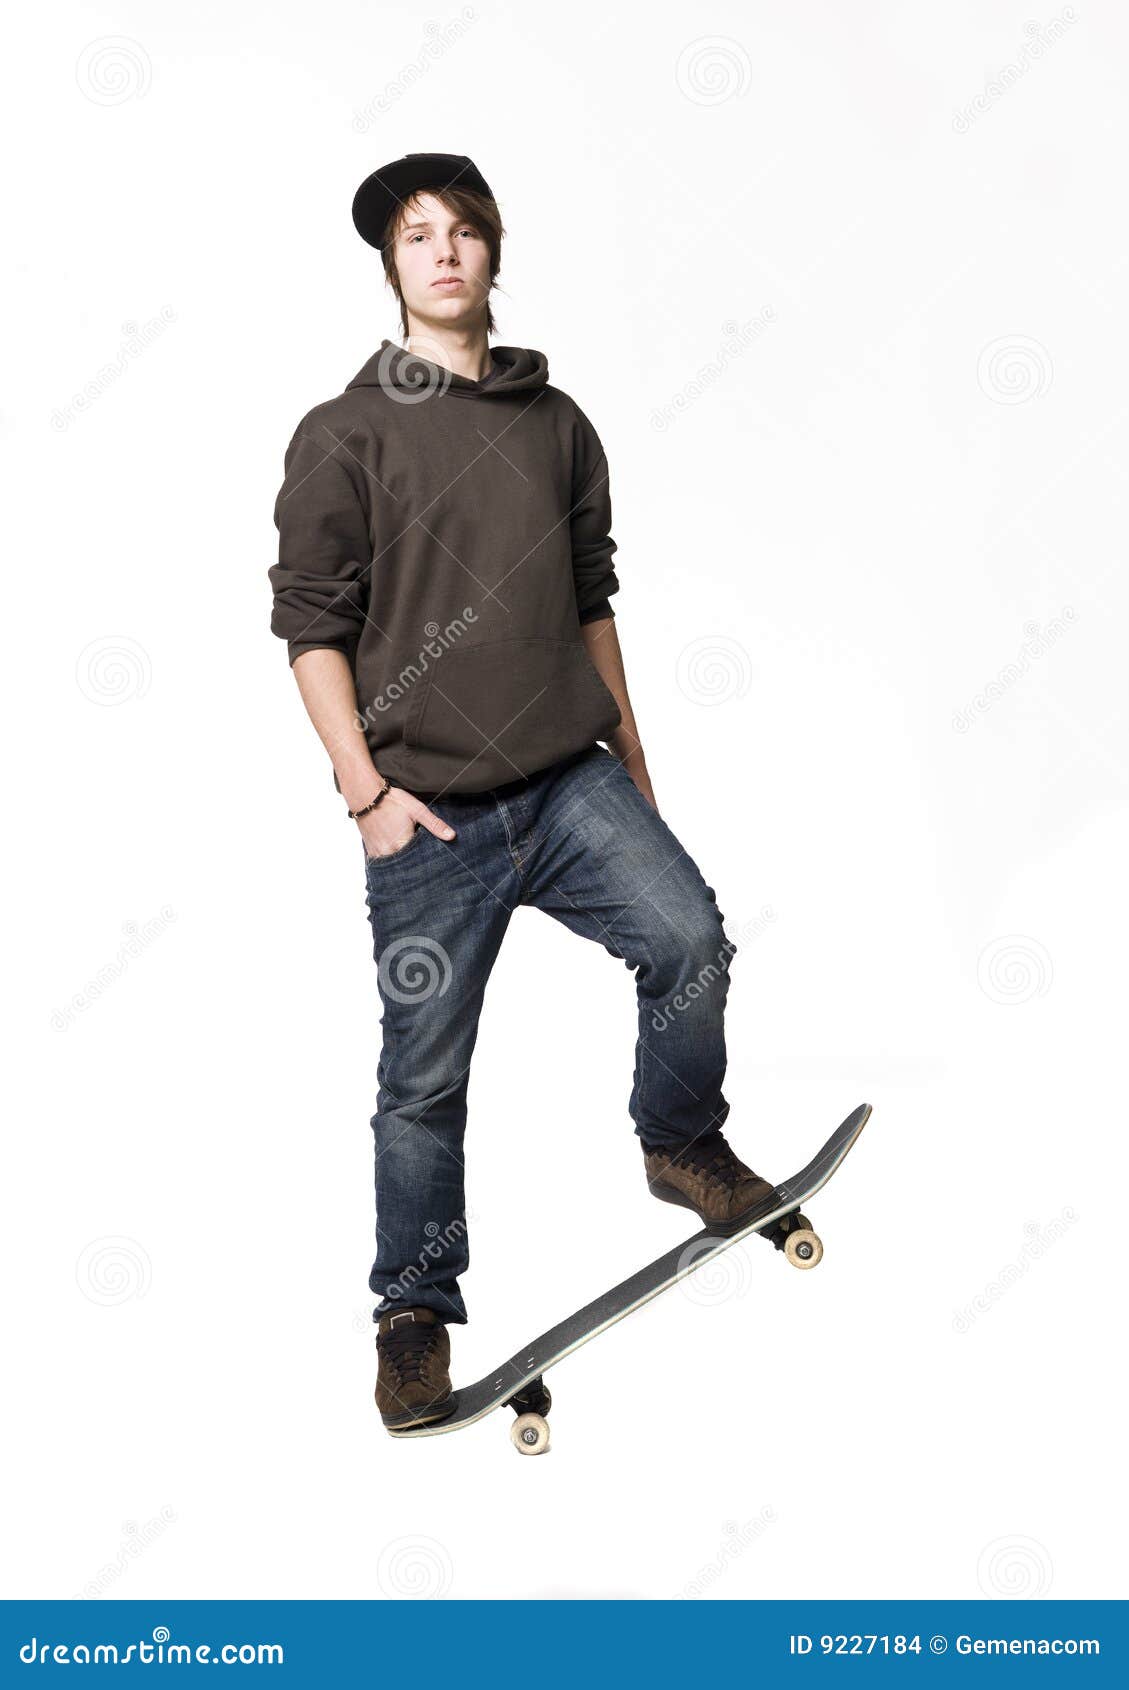 Emotional Support Human, Skateboard Deck Only